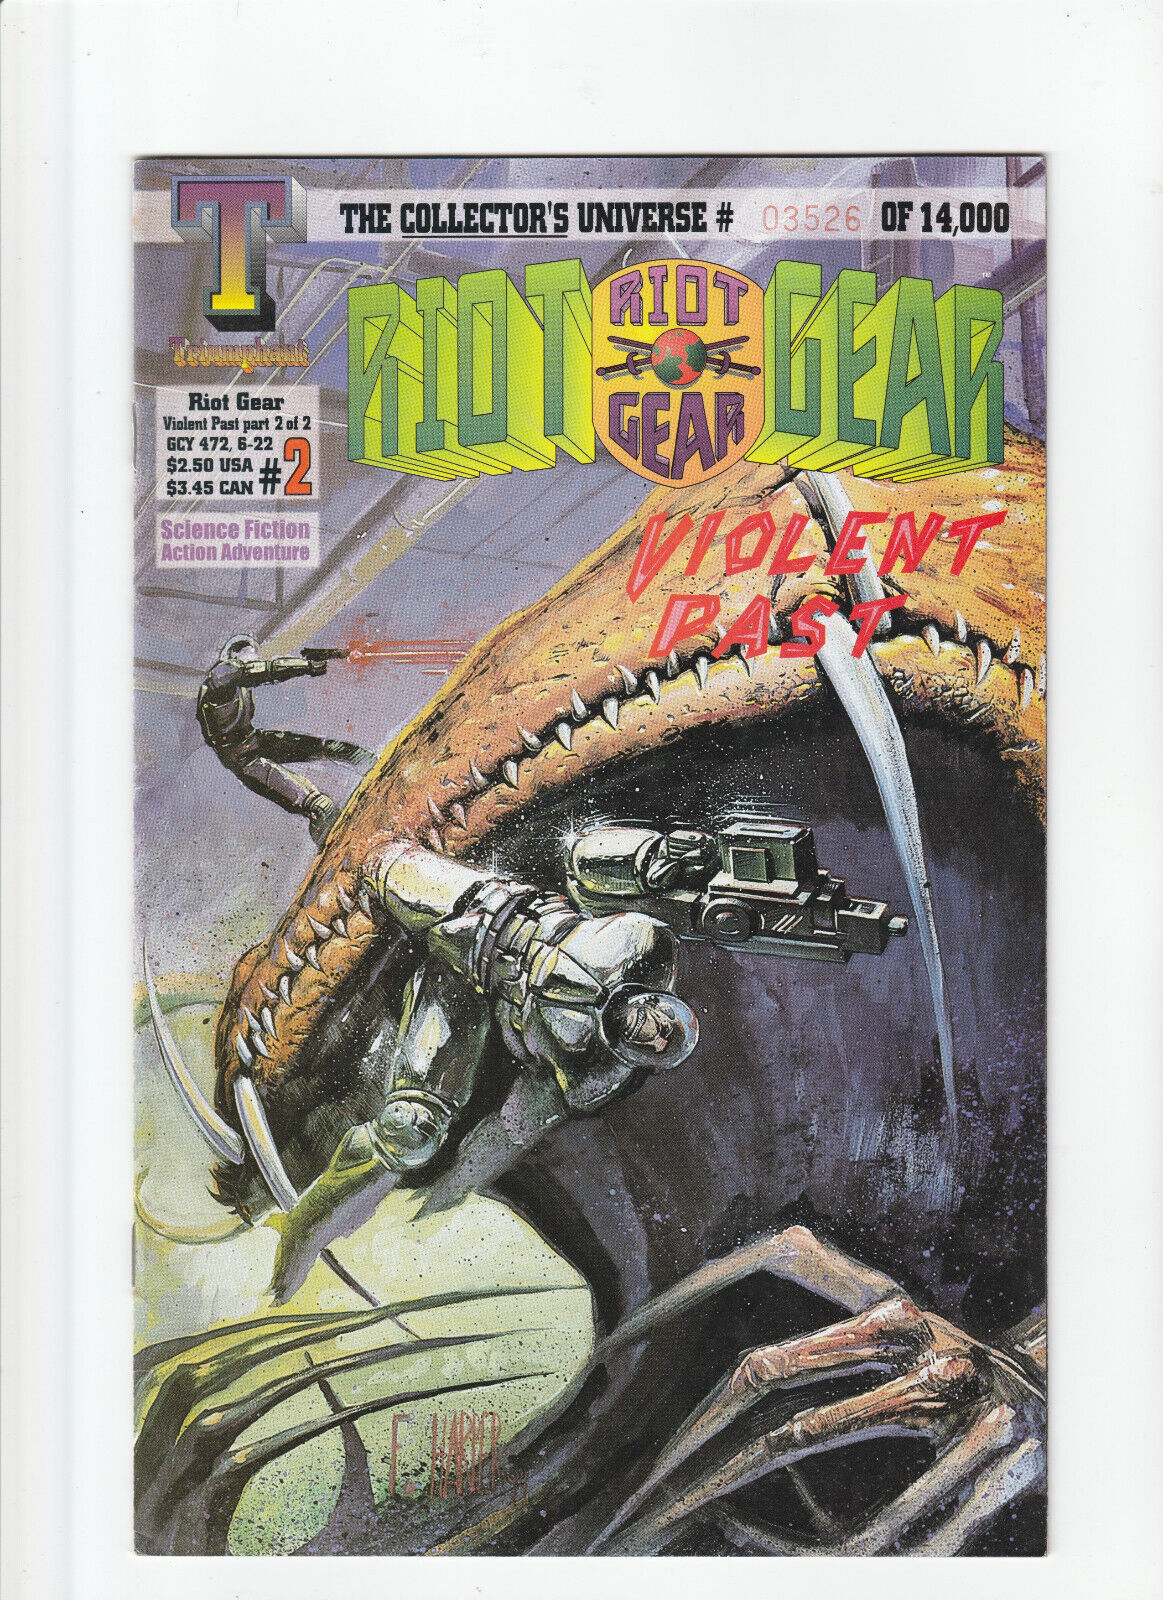 Riot Gear #2 (Oct 1993, Triumphant)